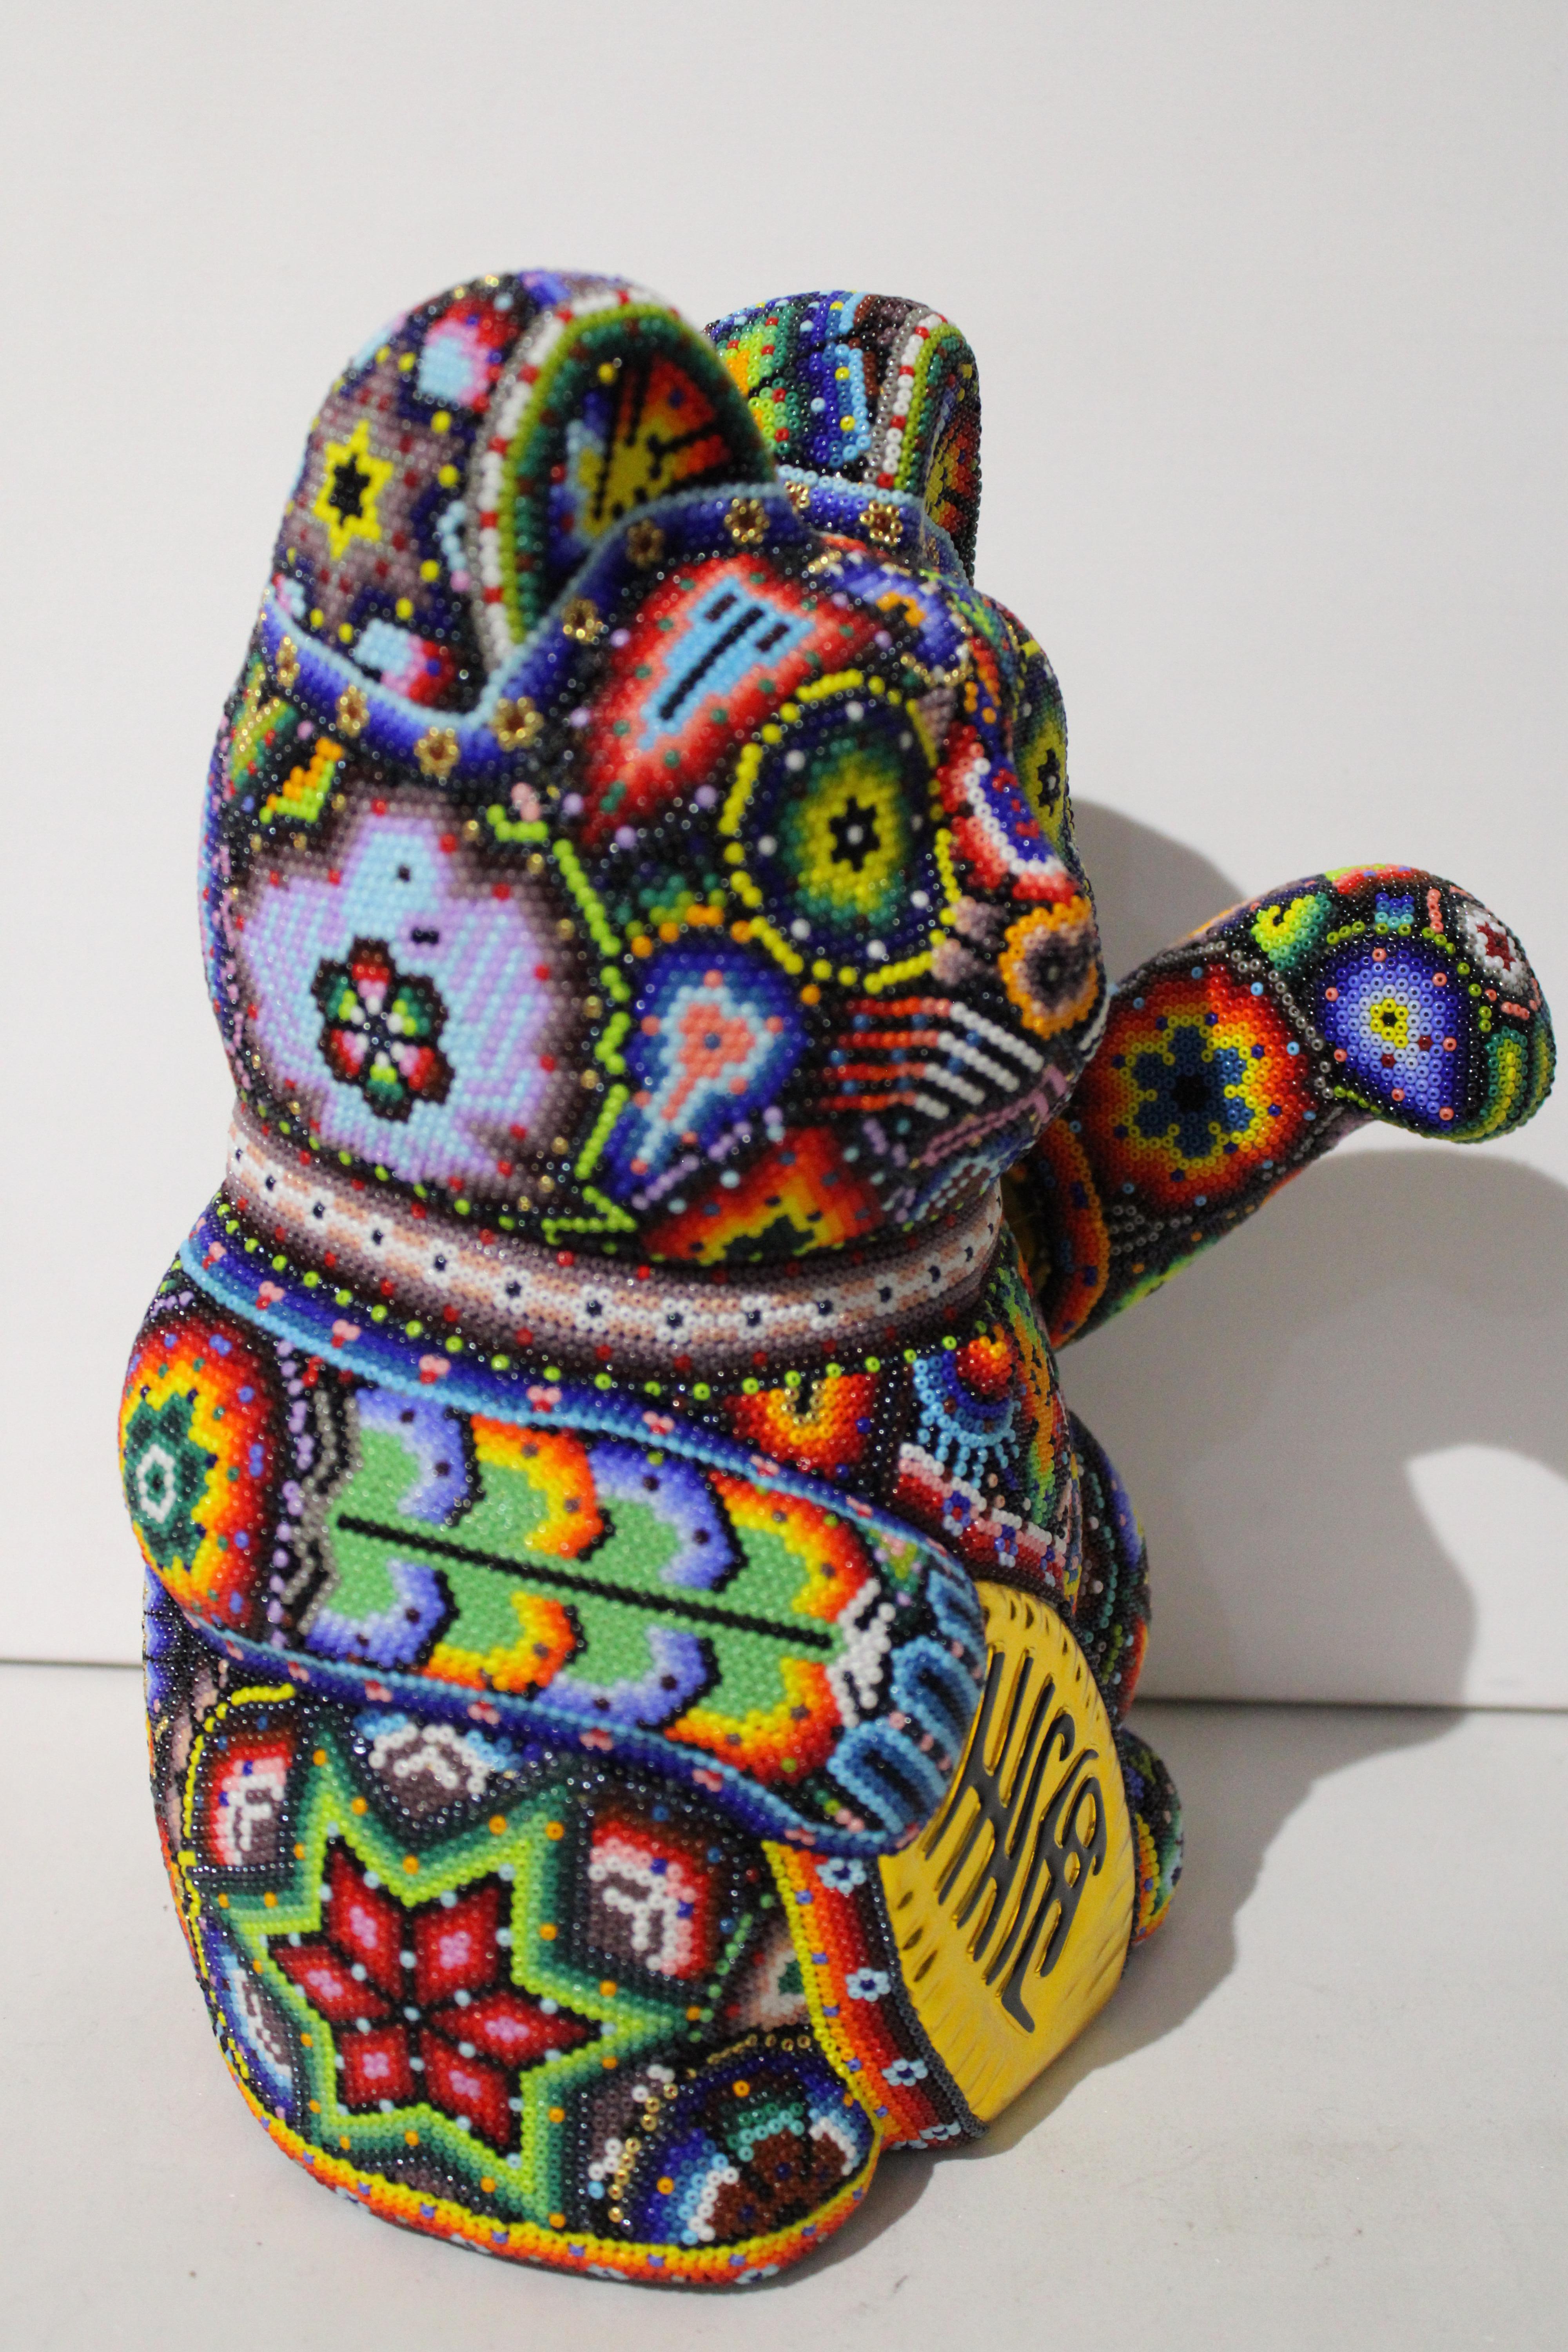 Cat Huichol ALTERATIONS série - Pop Art Sculpture par CHROMA aka Rick Wolfryd 